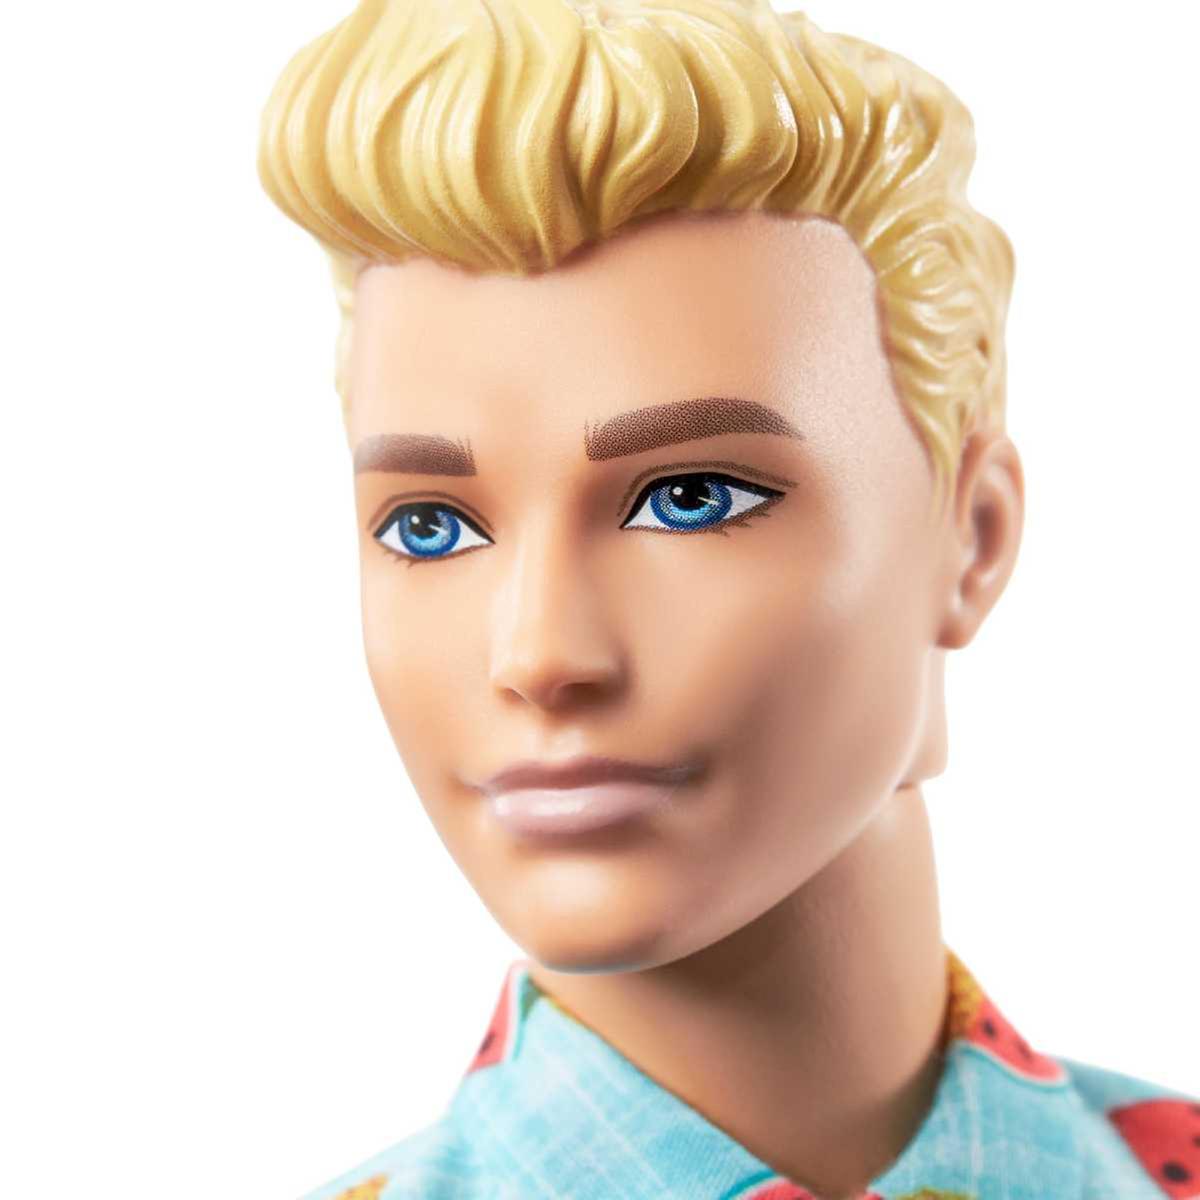 Barbie - Boneco Fashionista - Ken camisa de frutas, FASHIONISTAS